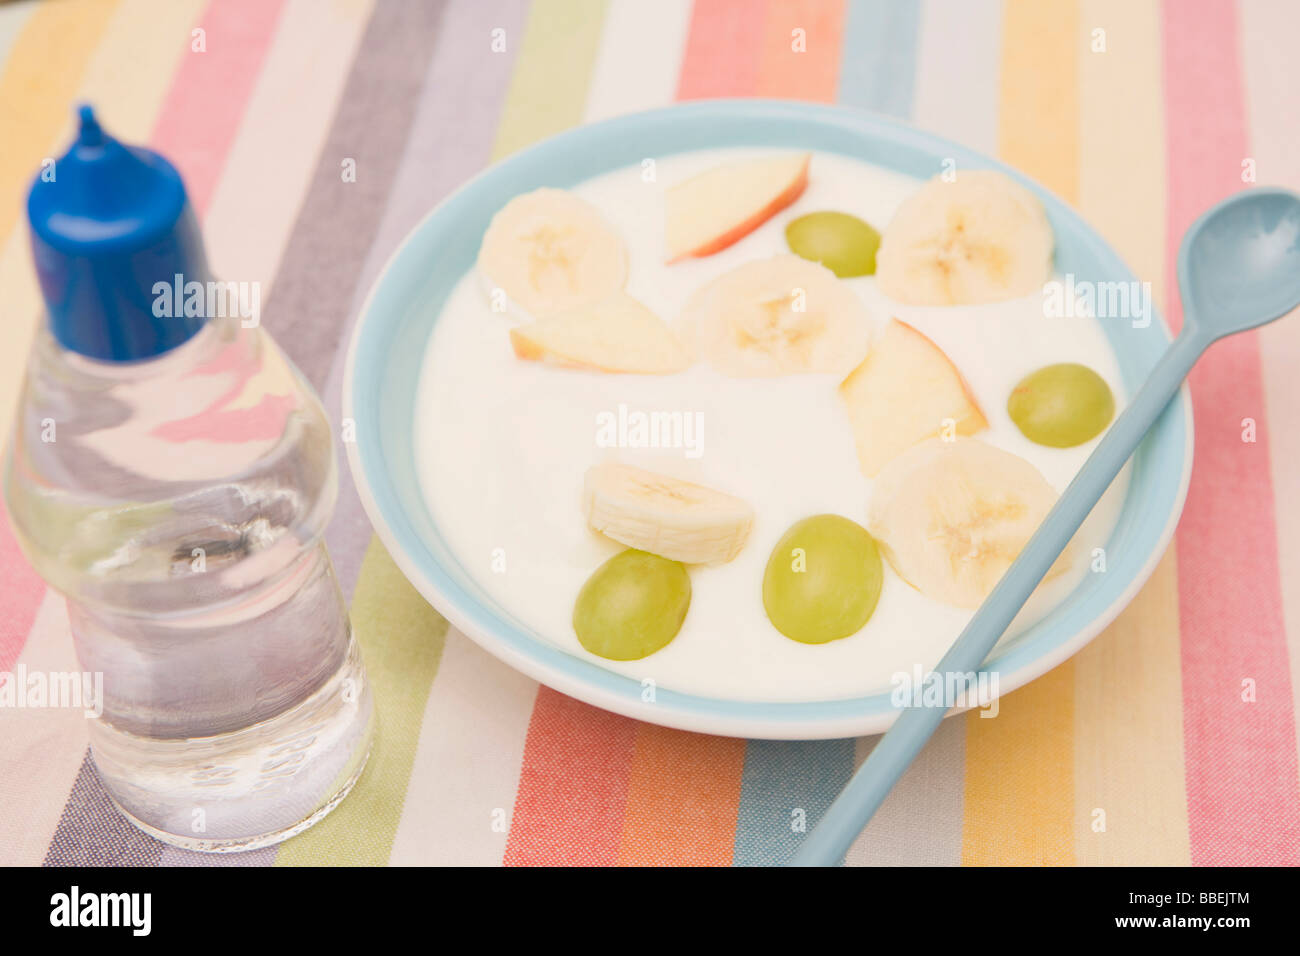 Bowl of Fruit and Yogurt and Bottle of Artifical Sweetener Stock Photo